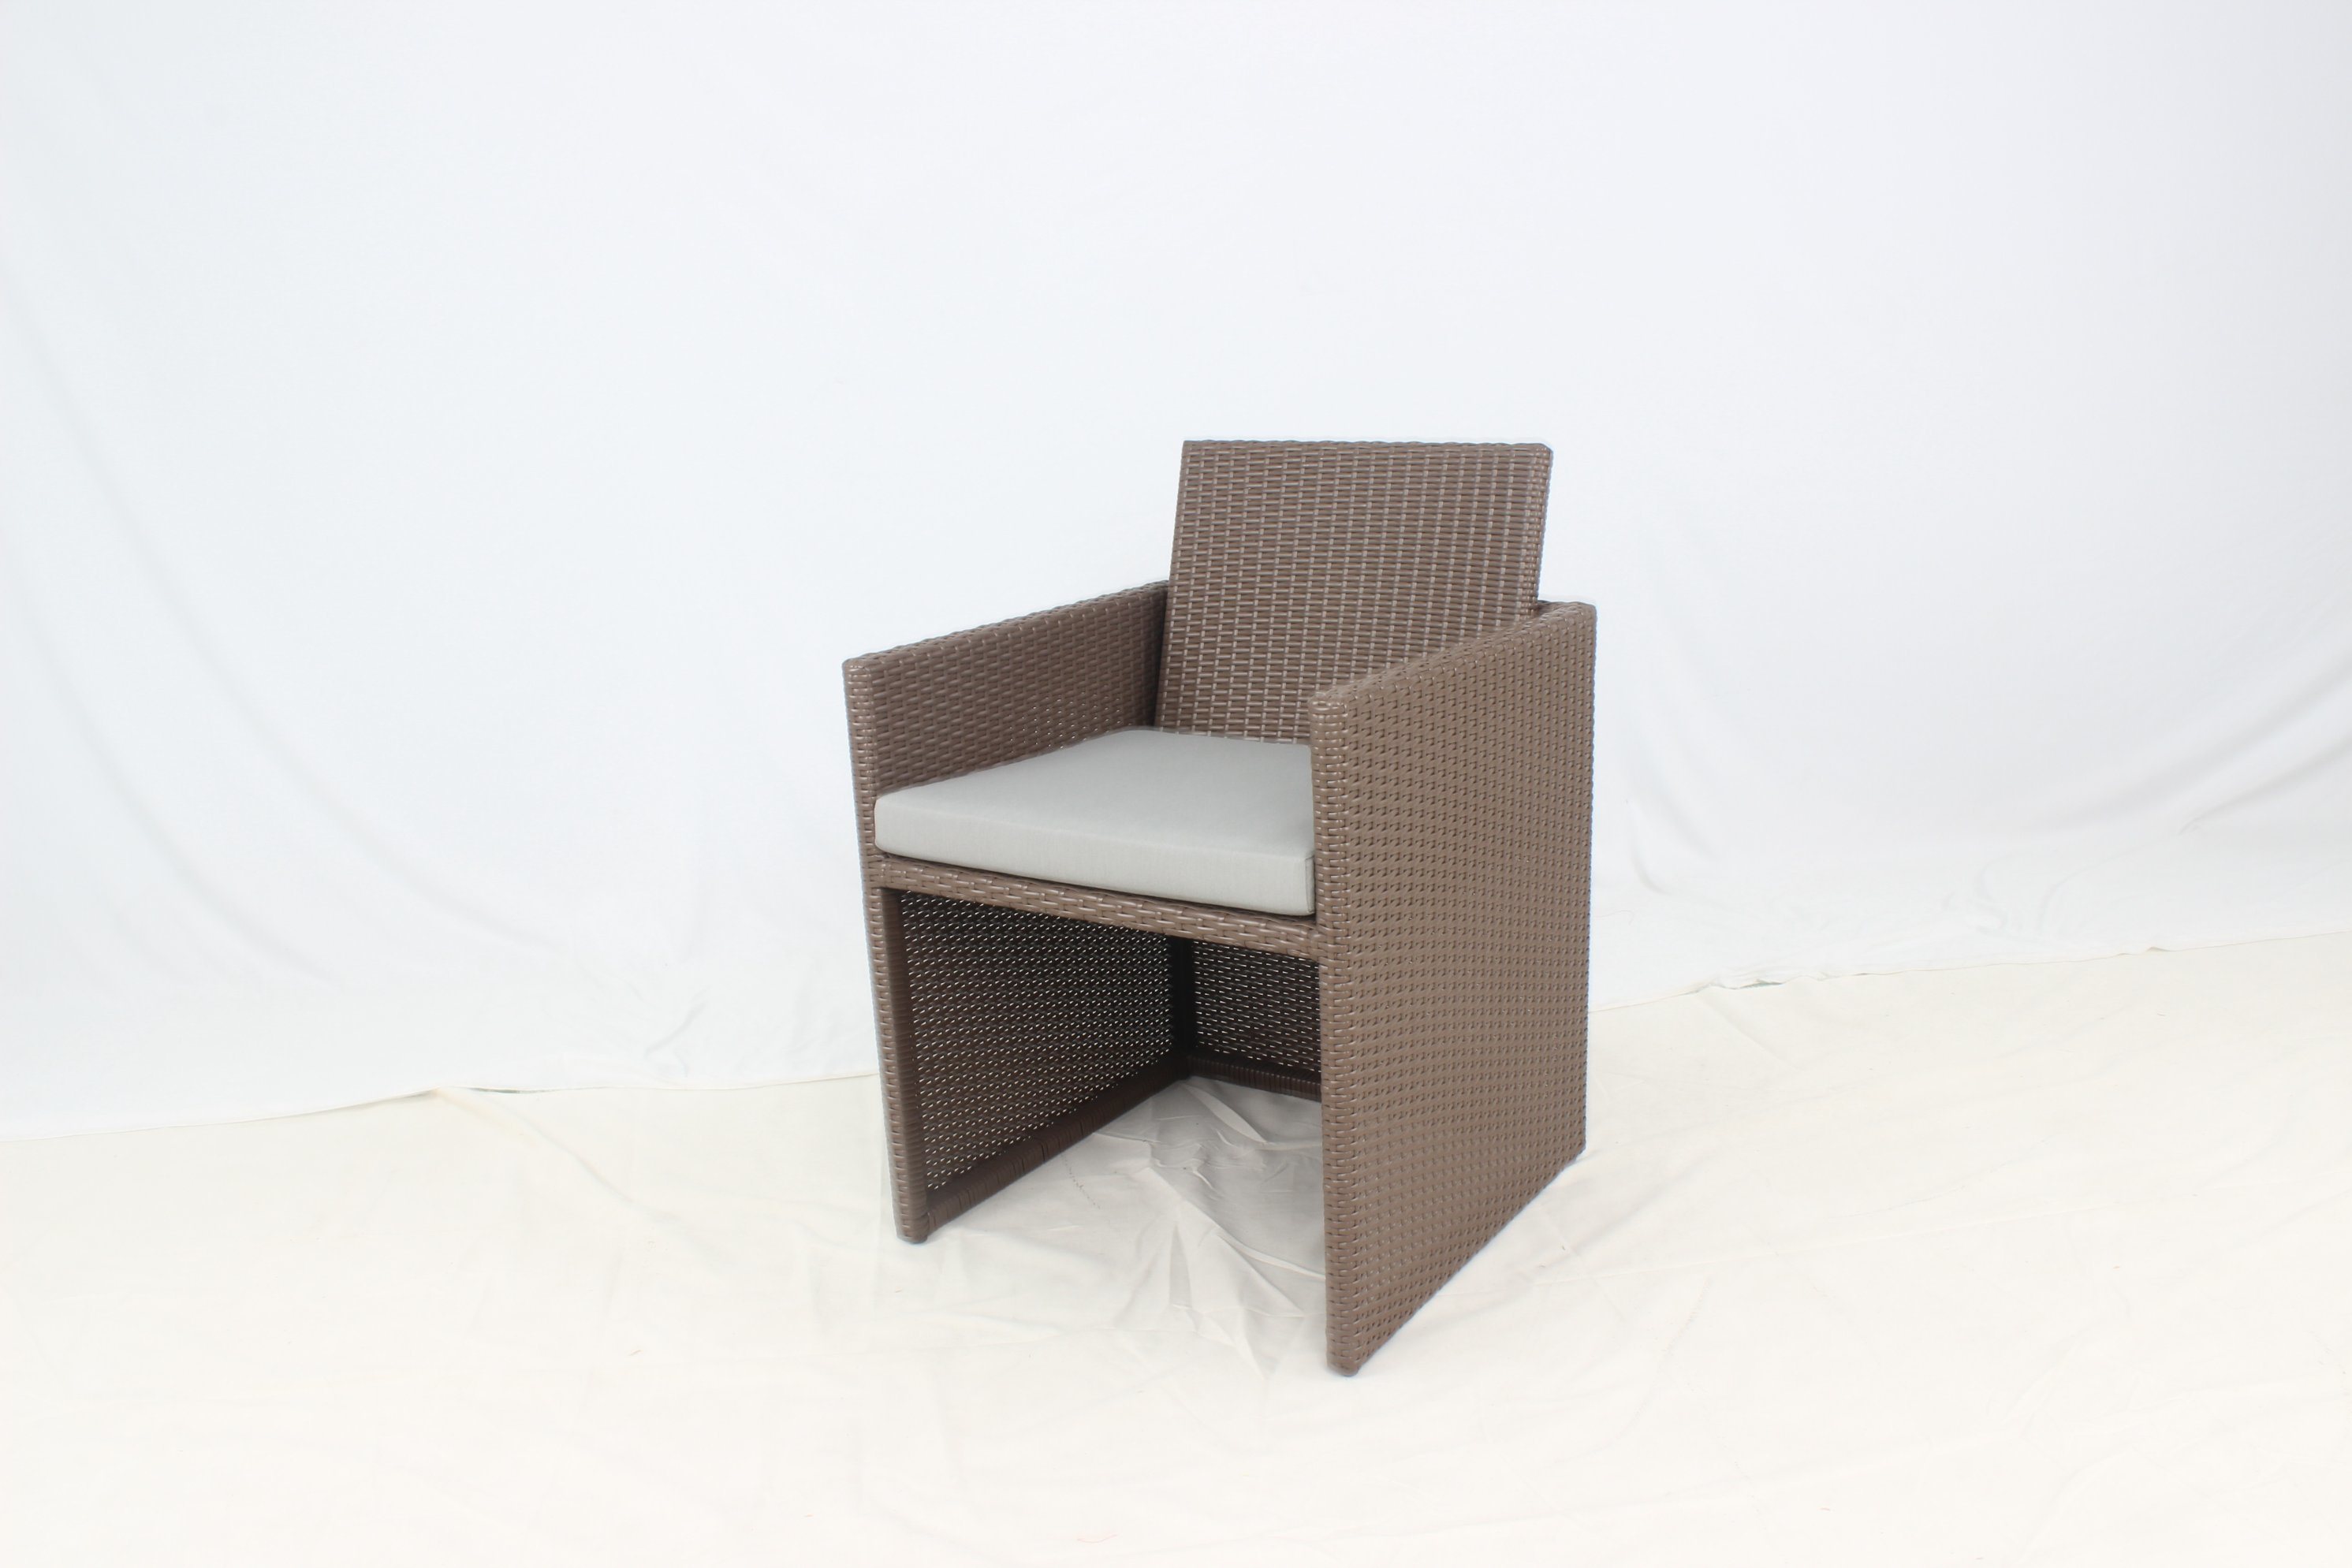 4 seater patio rattan cube dining furniture set